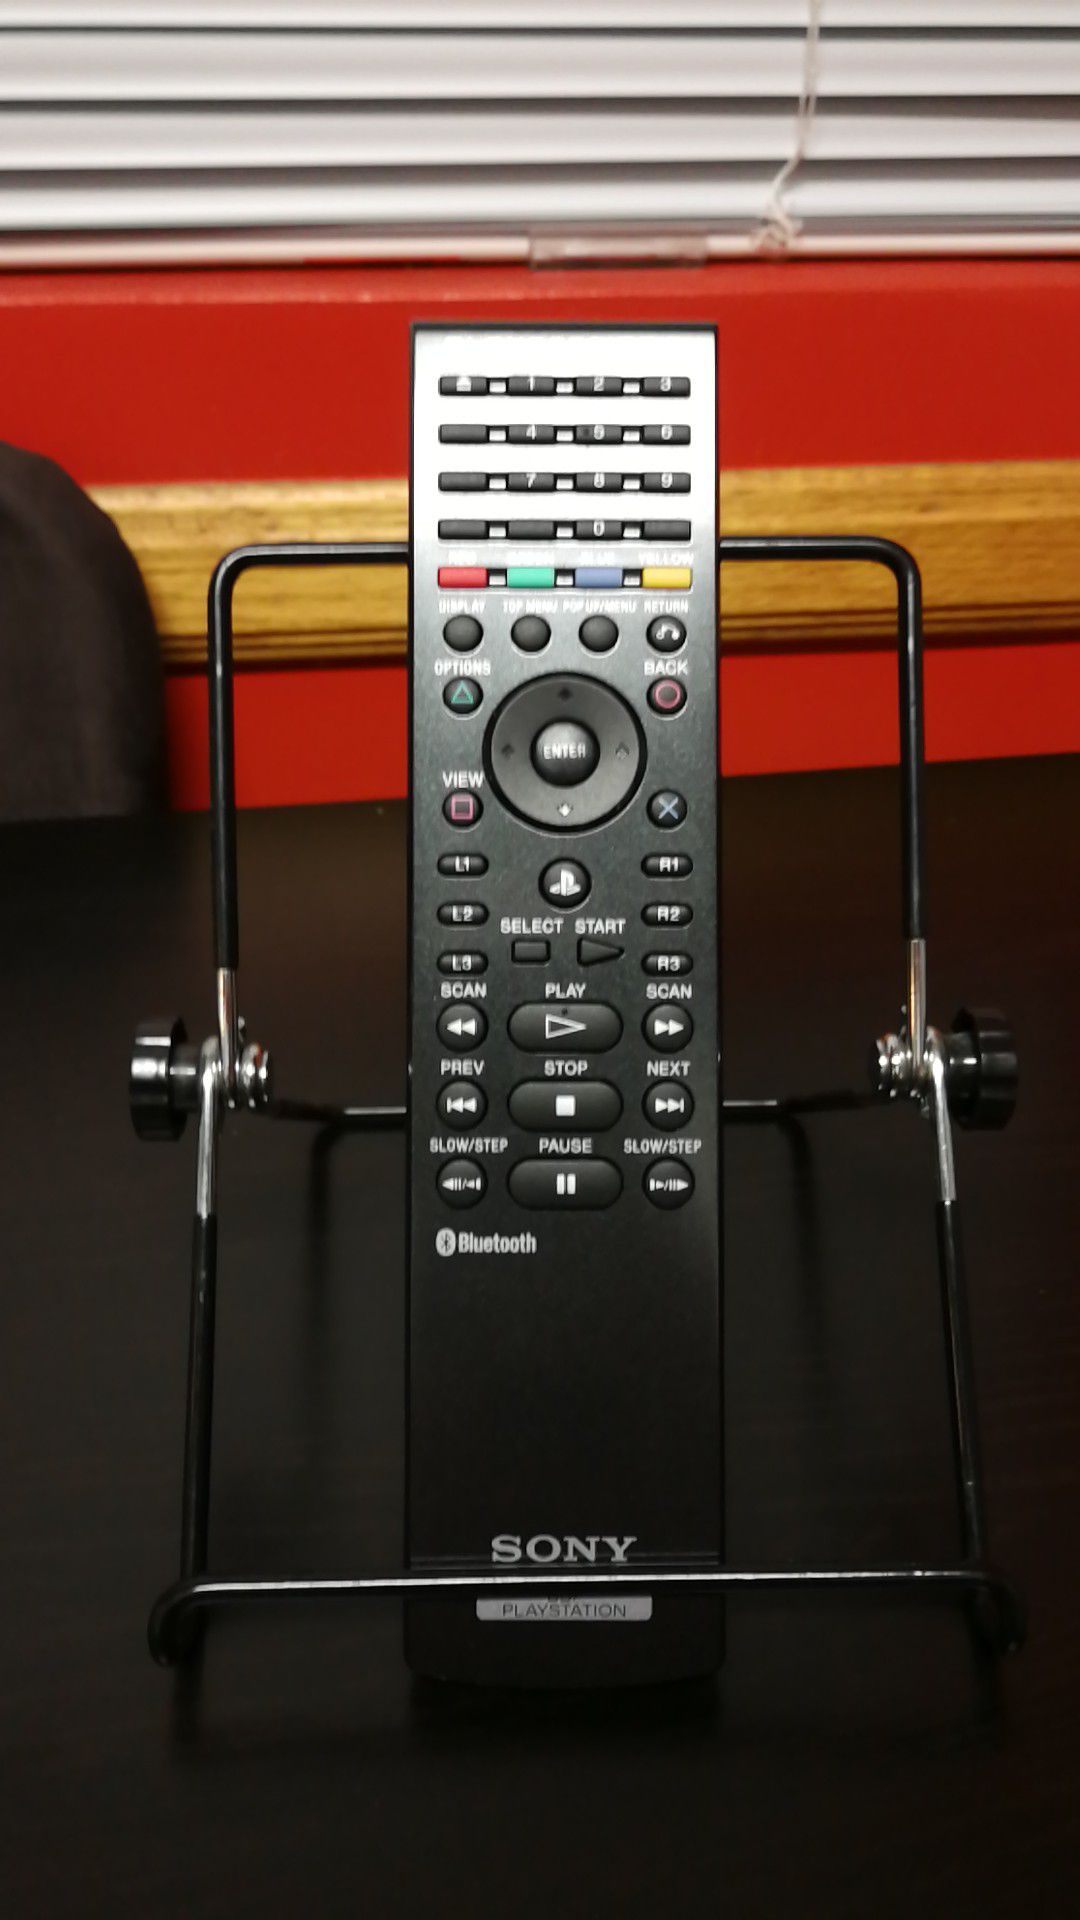 PlayStation 3 original Media player remote control